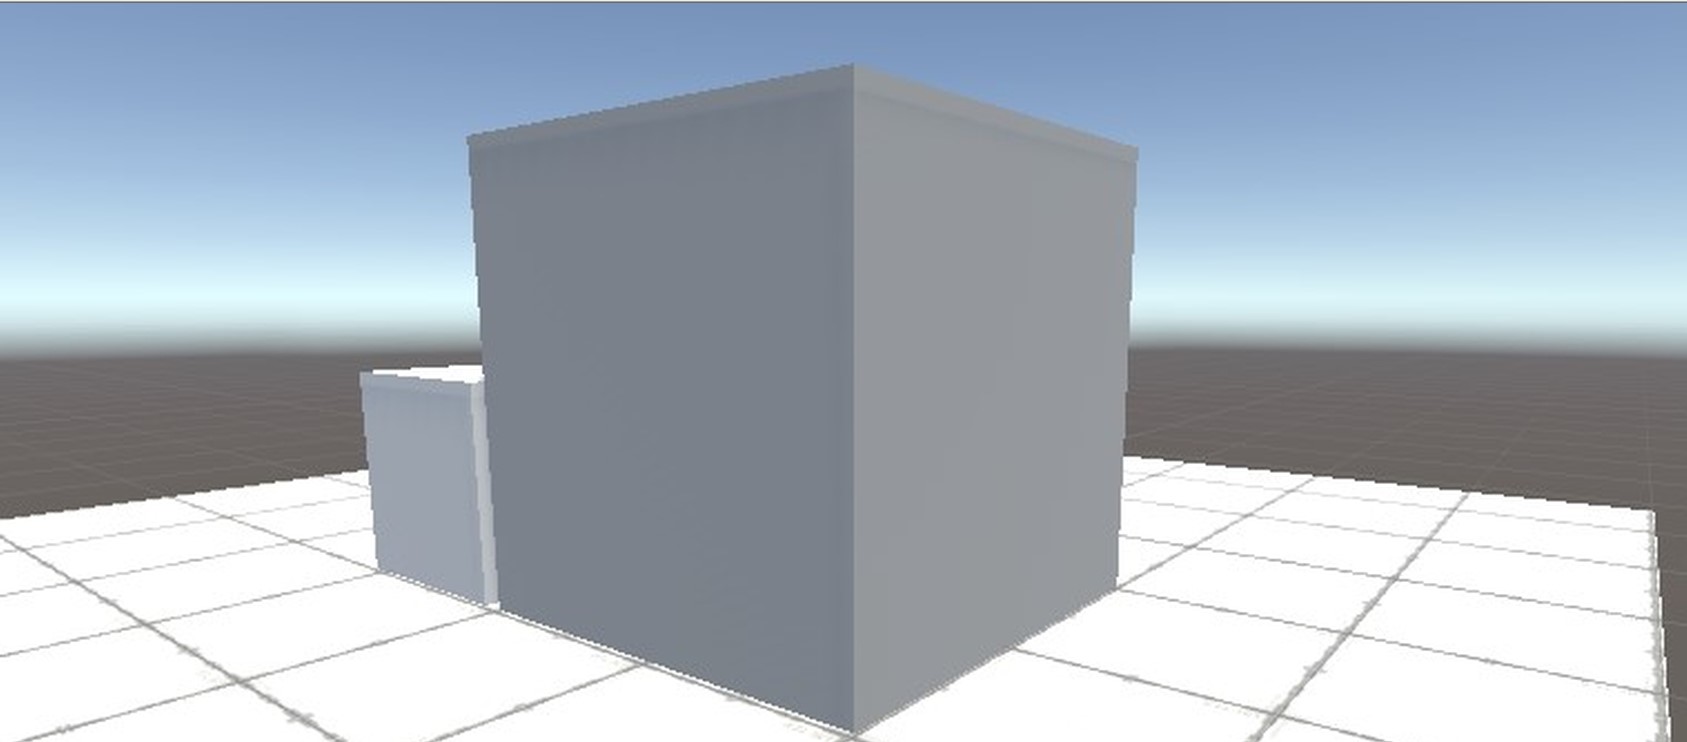 The Blender Default Cube FBX